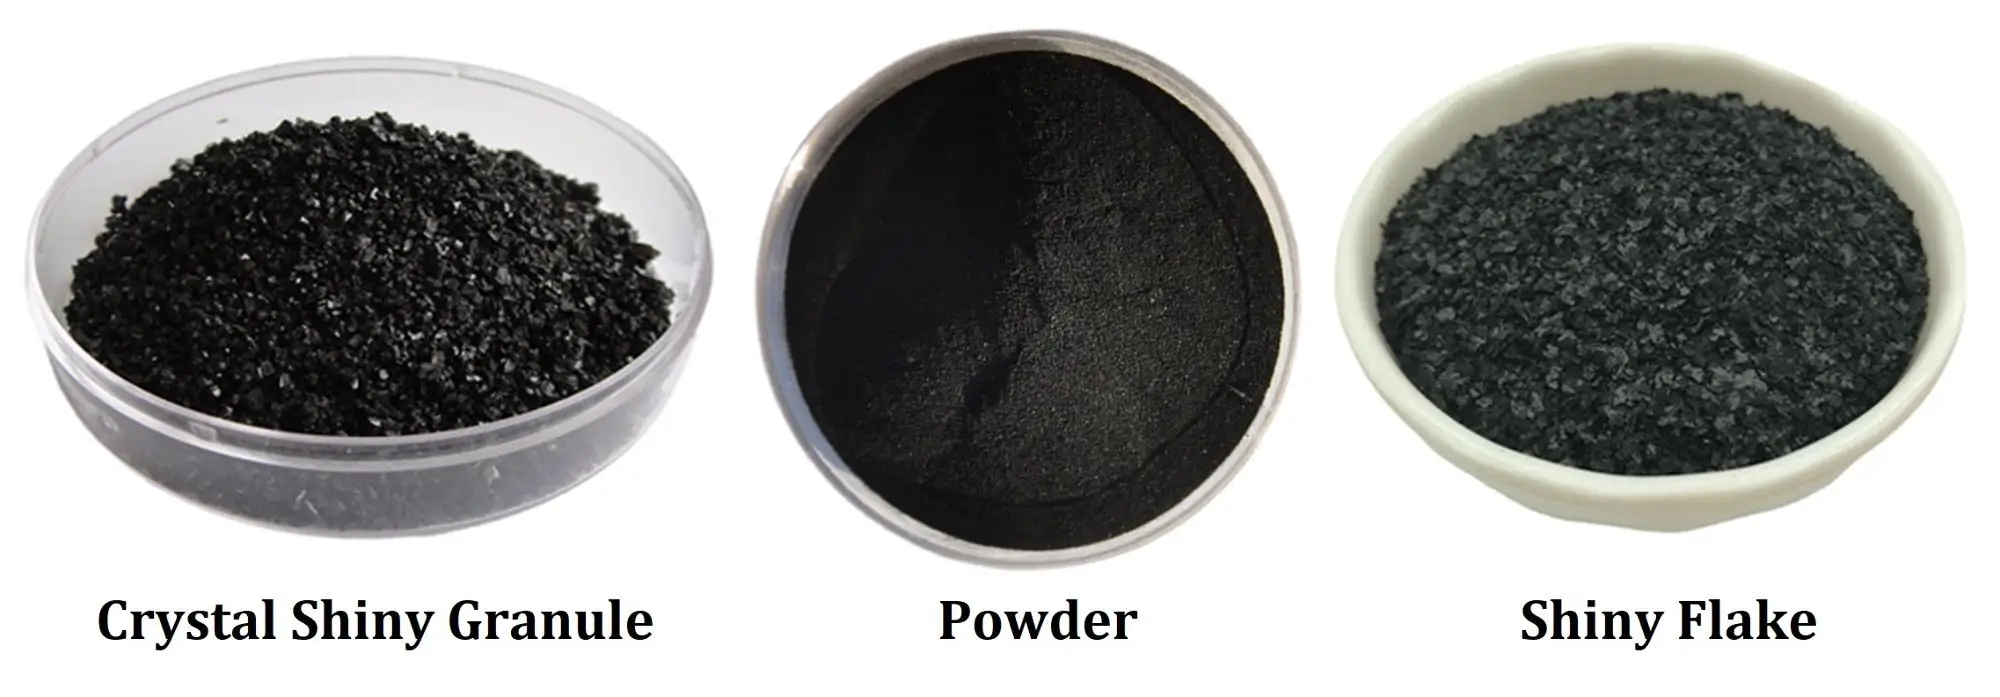 100% Water Soluble Soil Amendments Leonardite Humic Acid Potassium Humate Shiny Flake / Powder / Granular Organic Fertilizer